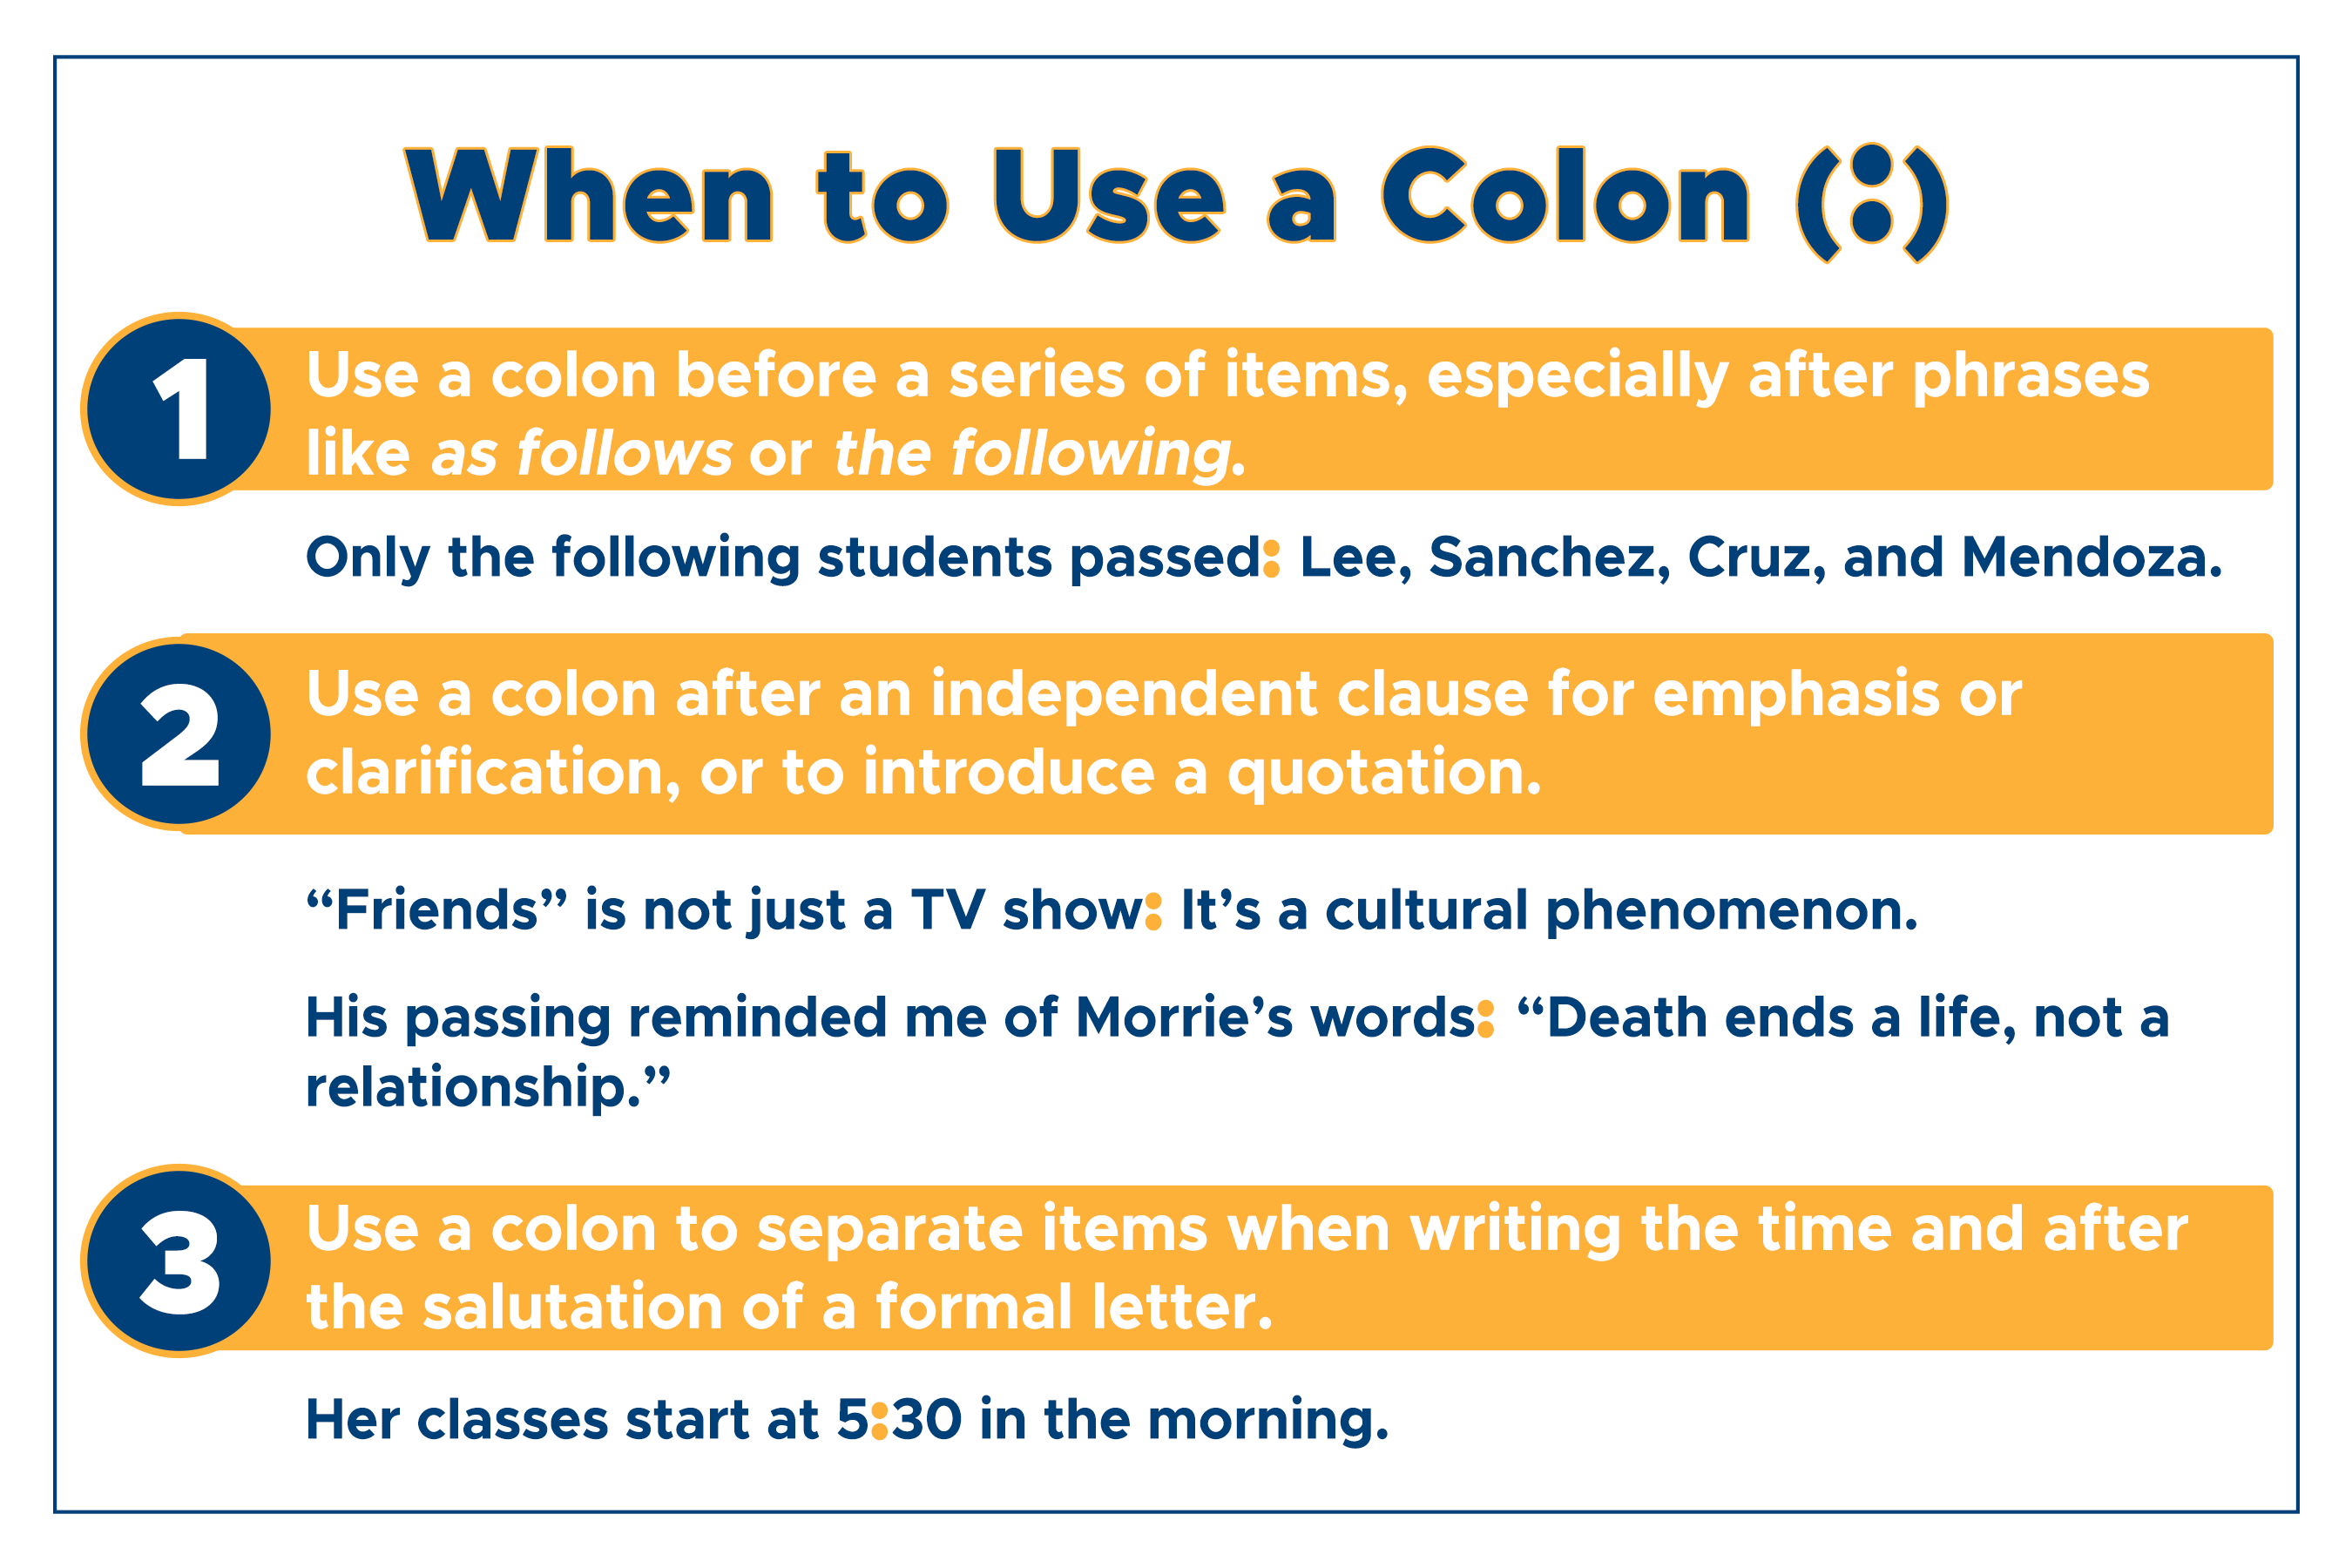 When to use a colon (:)